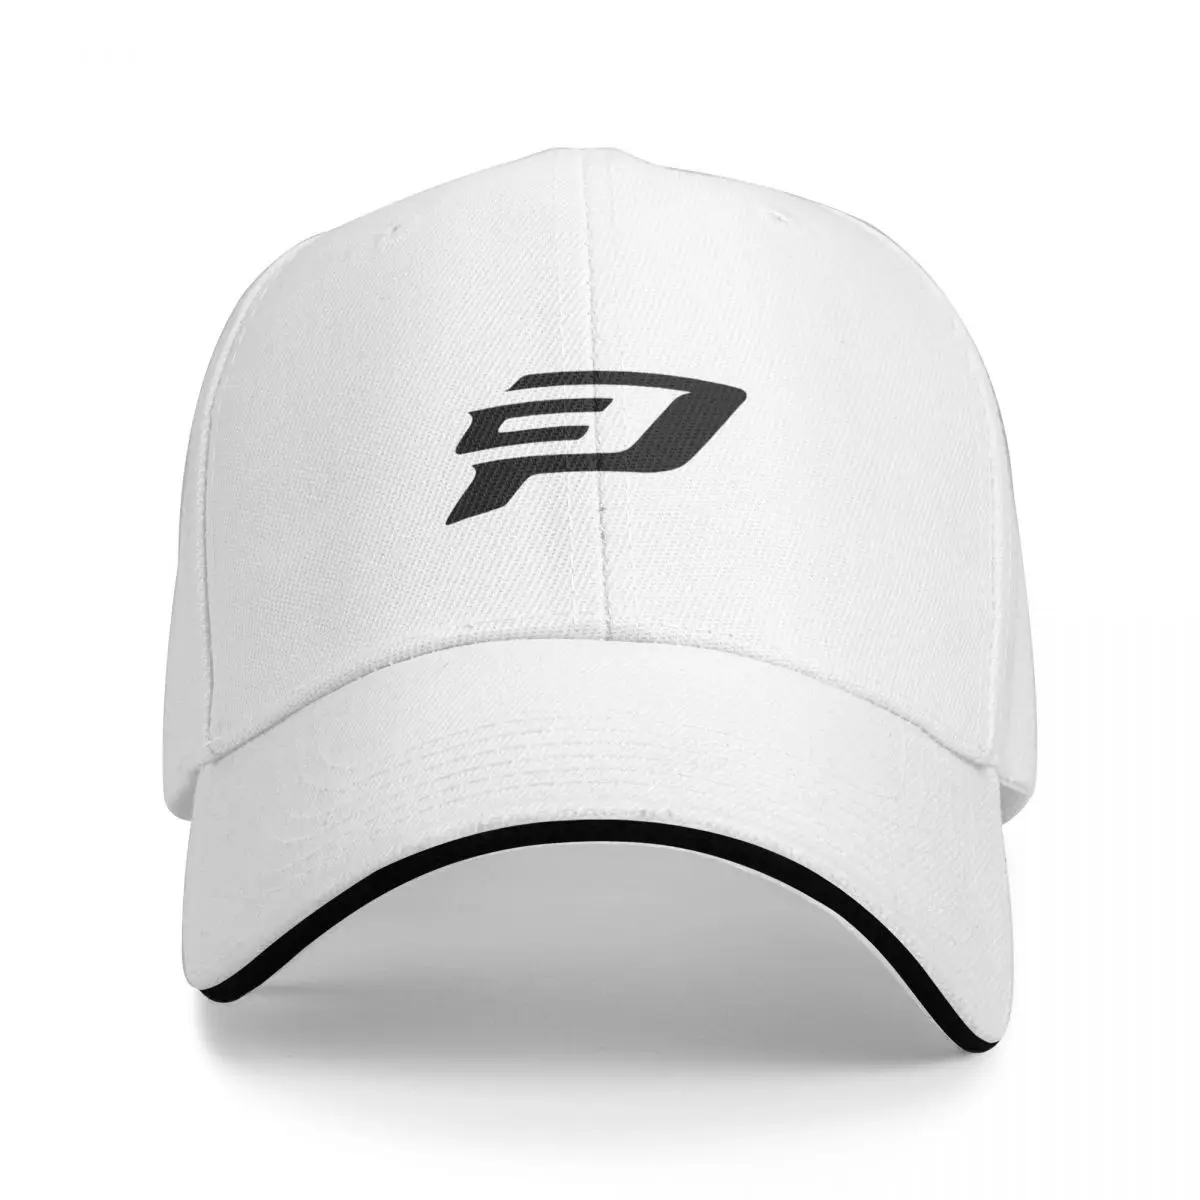 

BEST SELLING - Chris Paul Cap Baseball Cap sun hat mens caps Women's